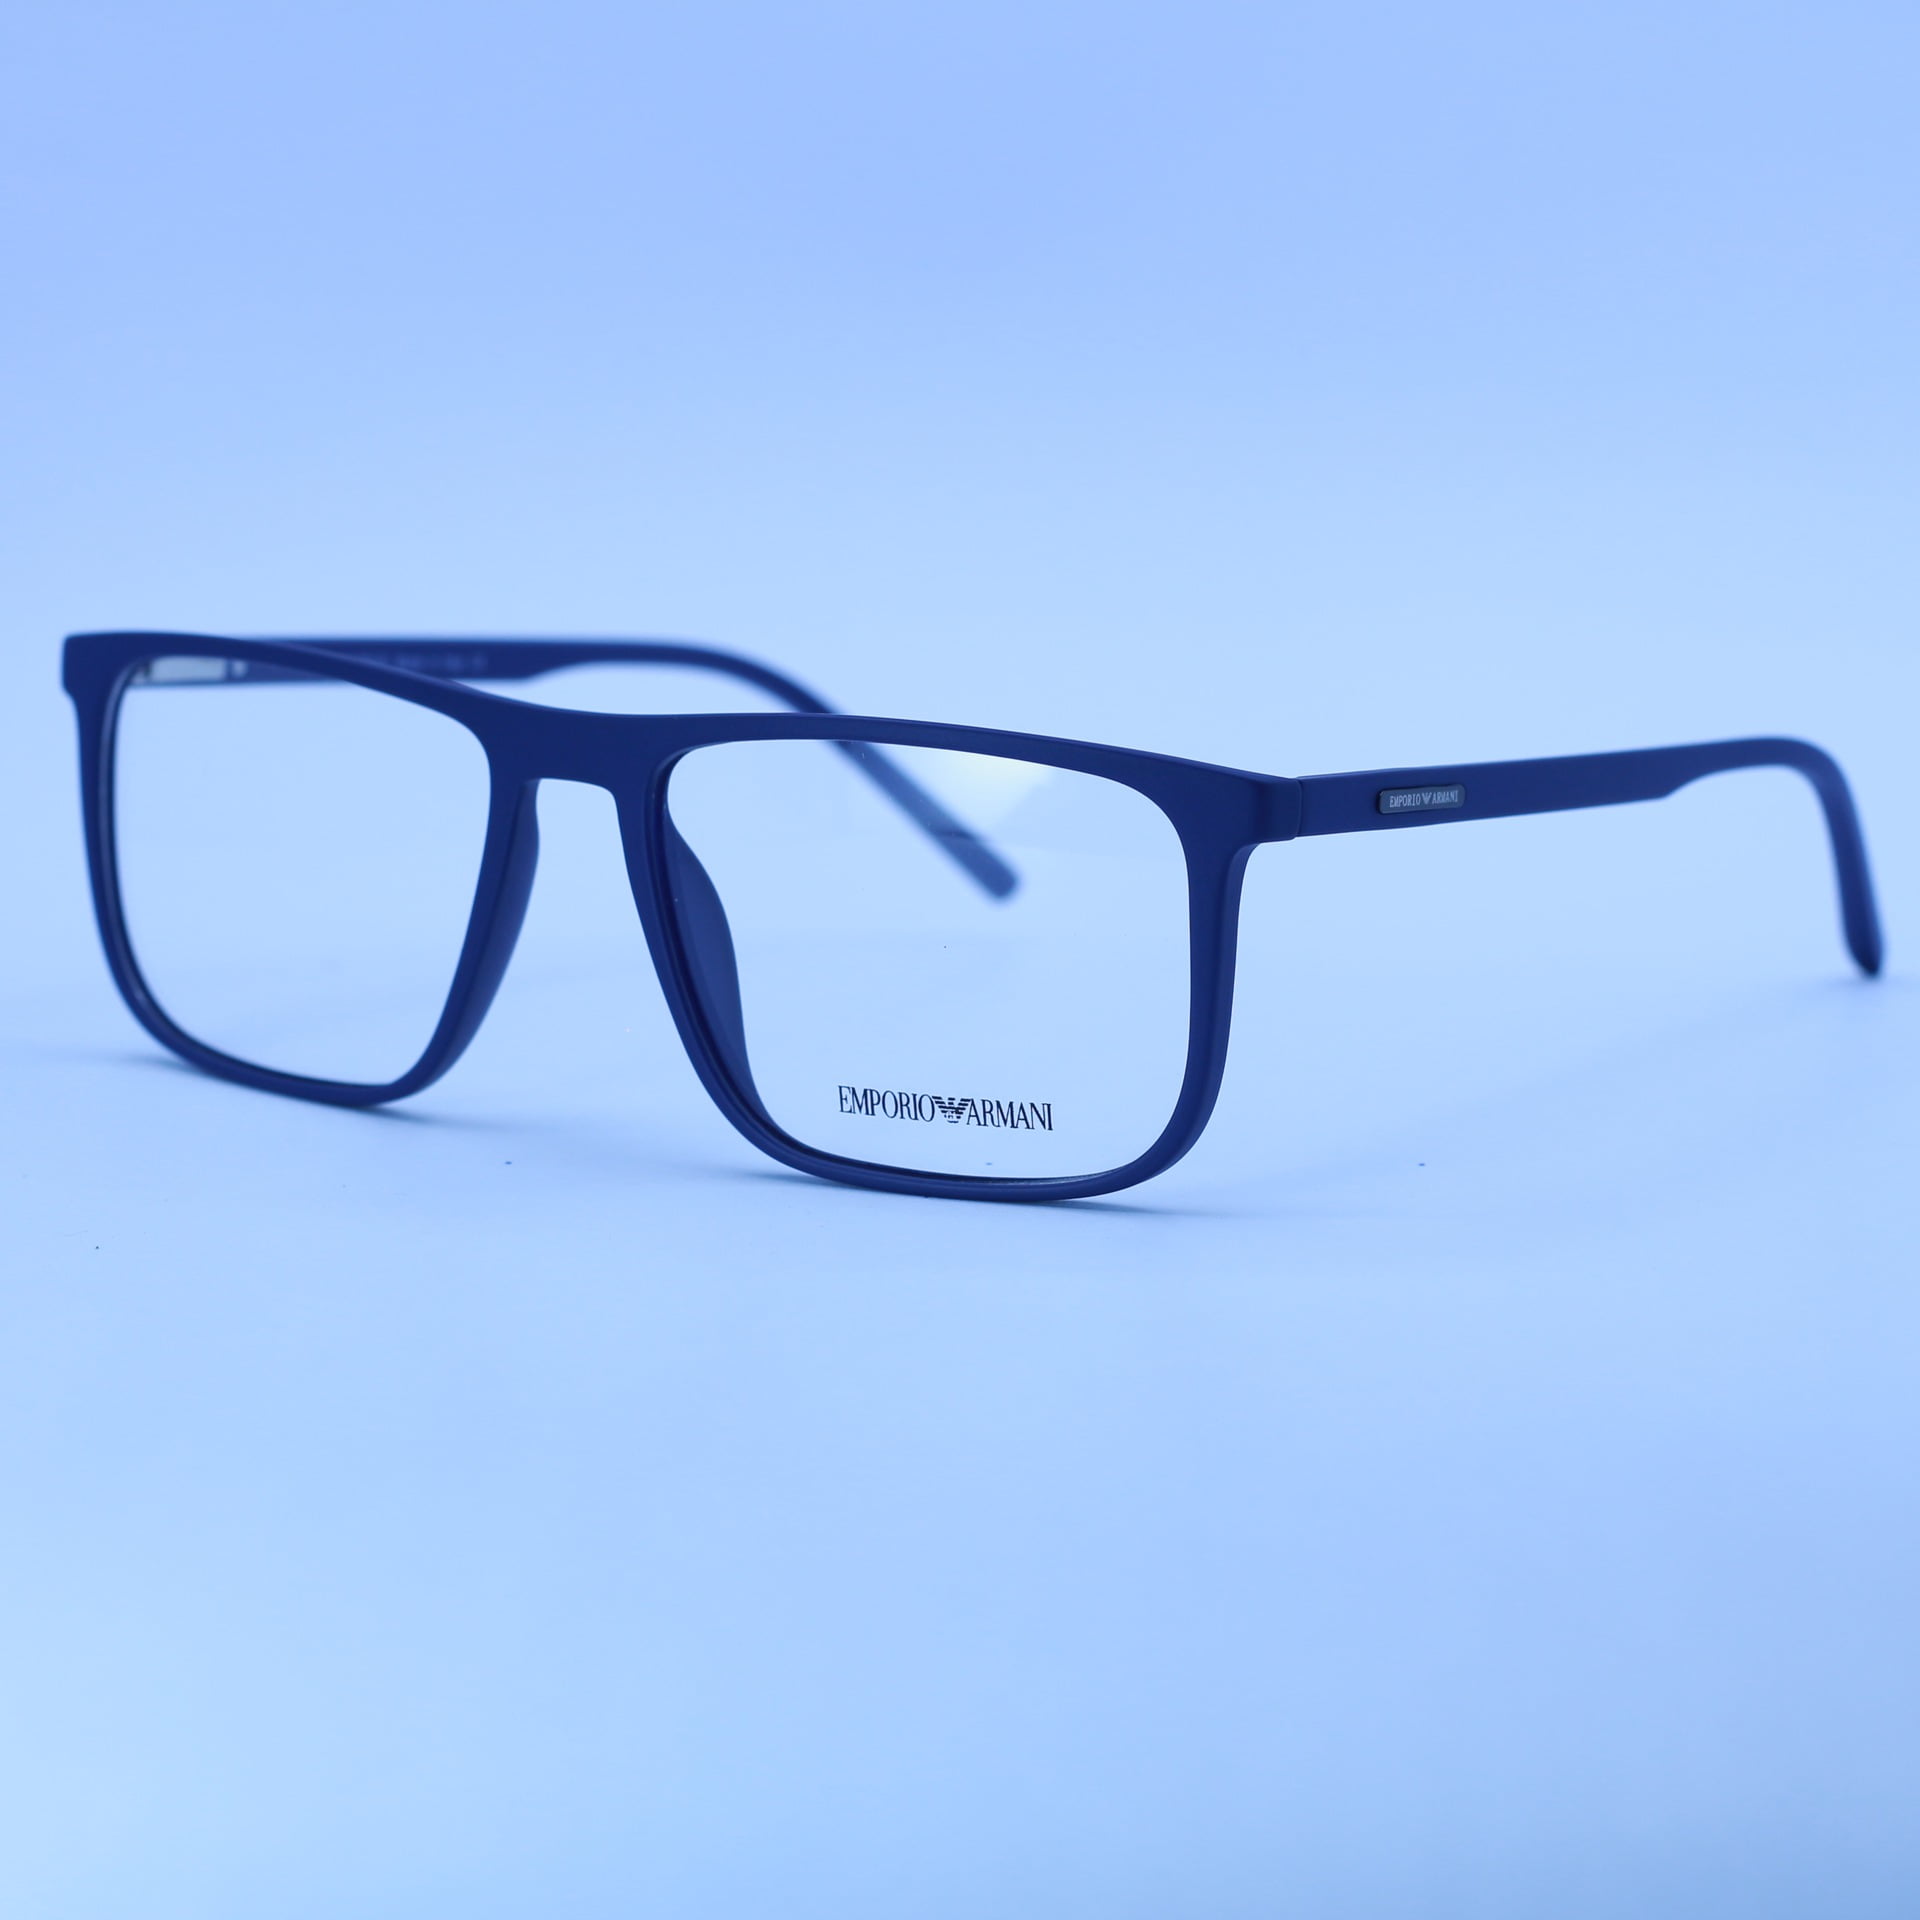 Emporia Armani Optical Frames 8031 - Buy Online Eye Glasses Frames in ...